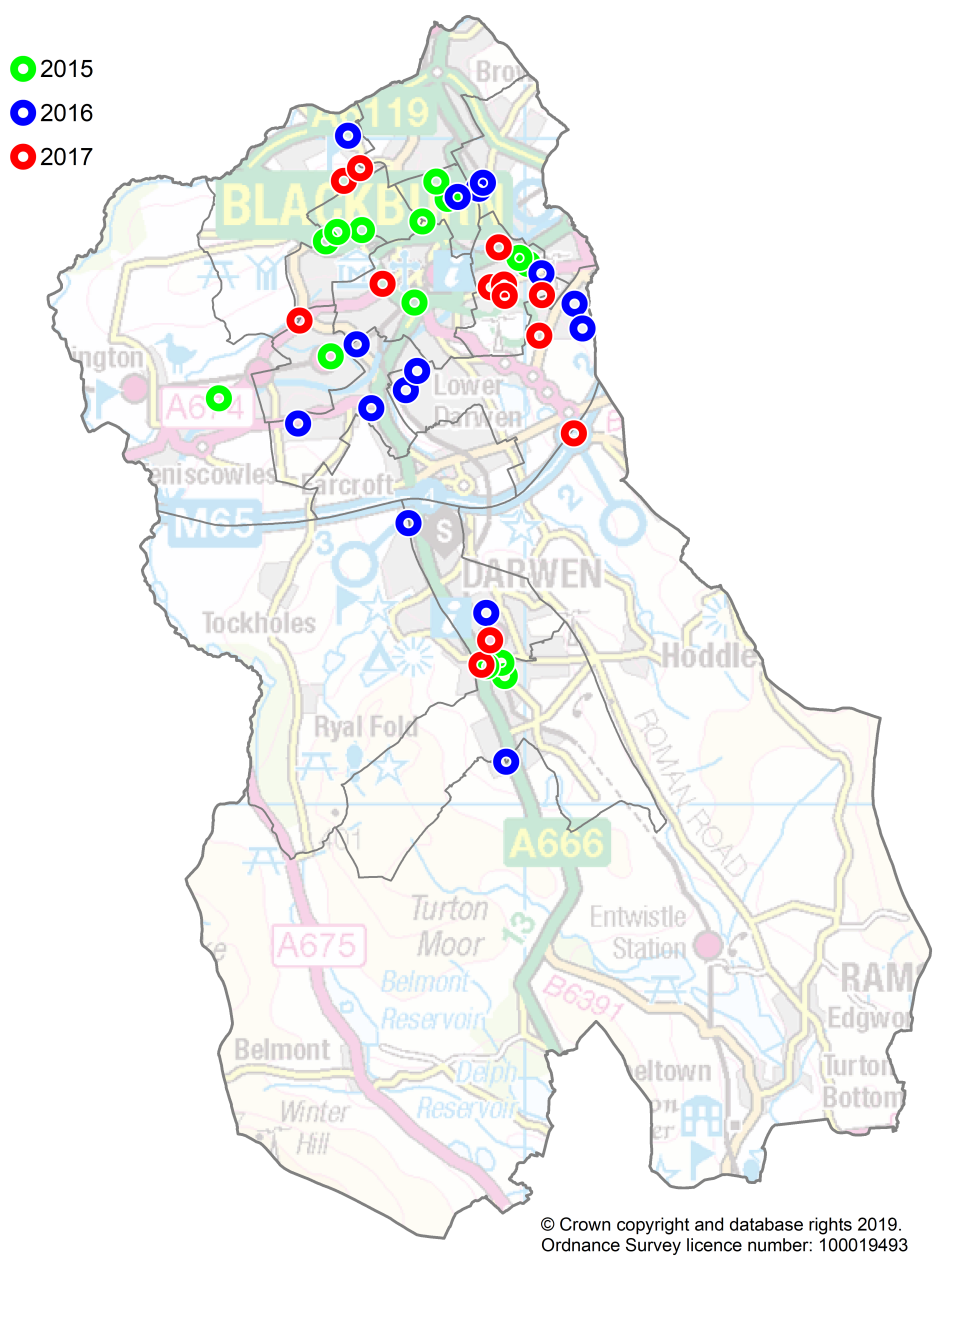 Children (0-15) Killed or Seriously Injured (KSI)in Blackburn with Darwen 2015-17(showing ward boundaries)